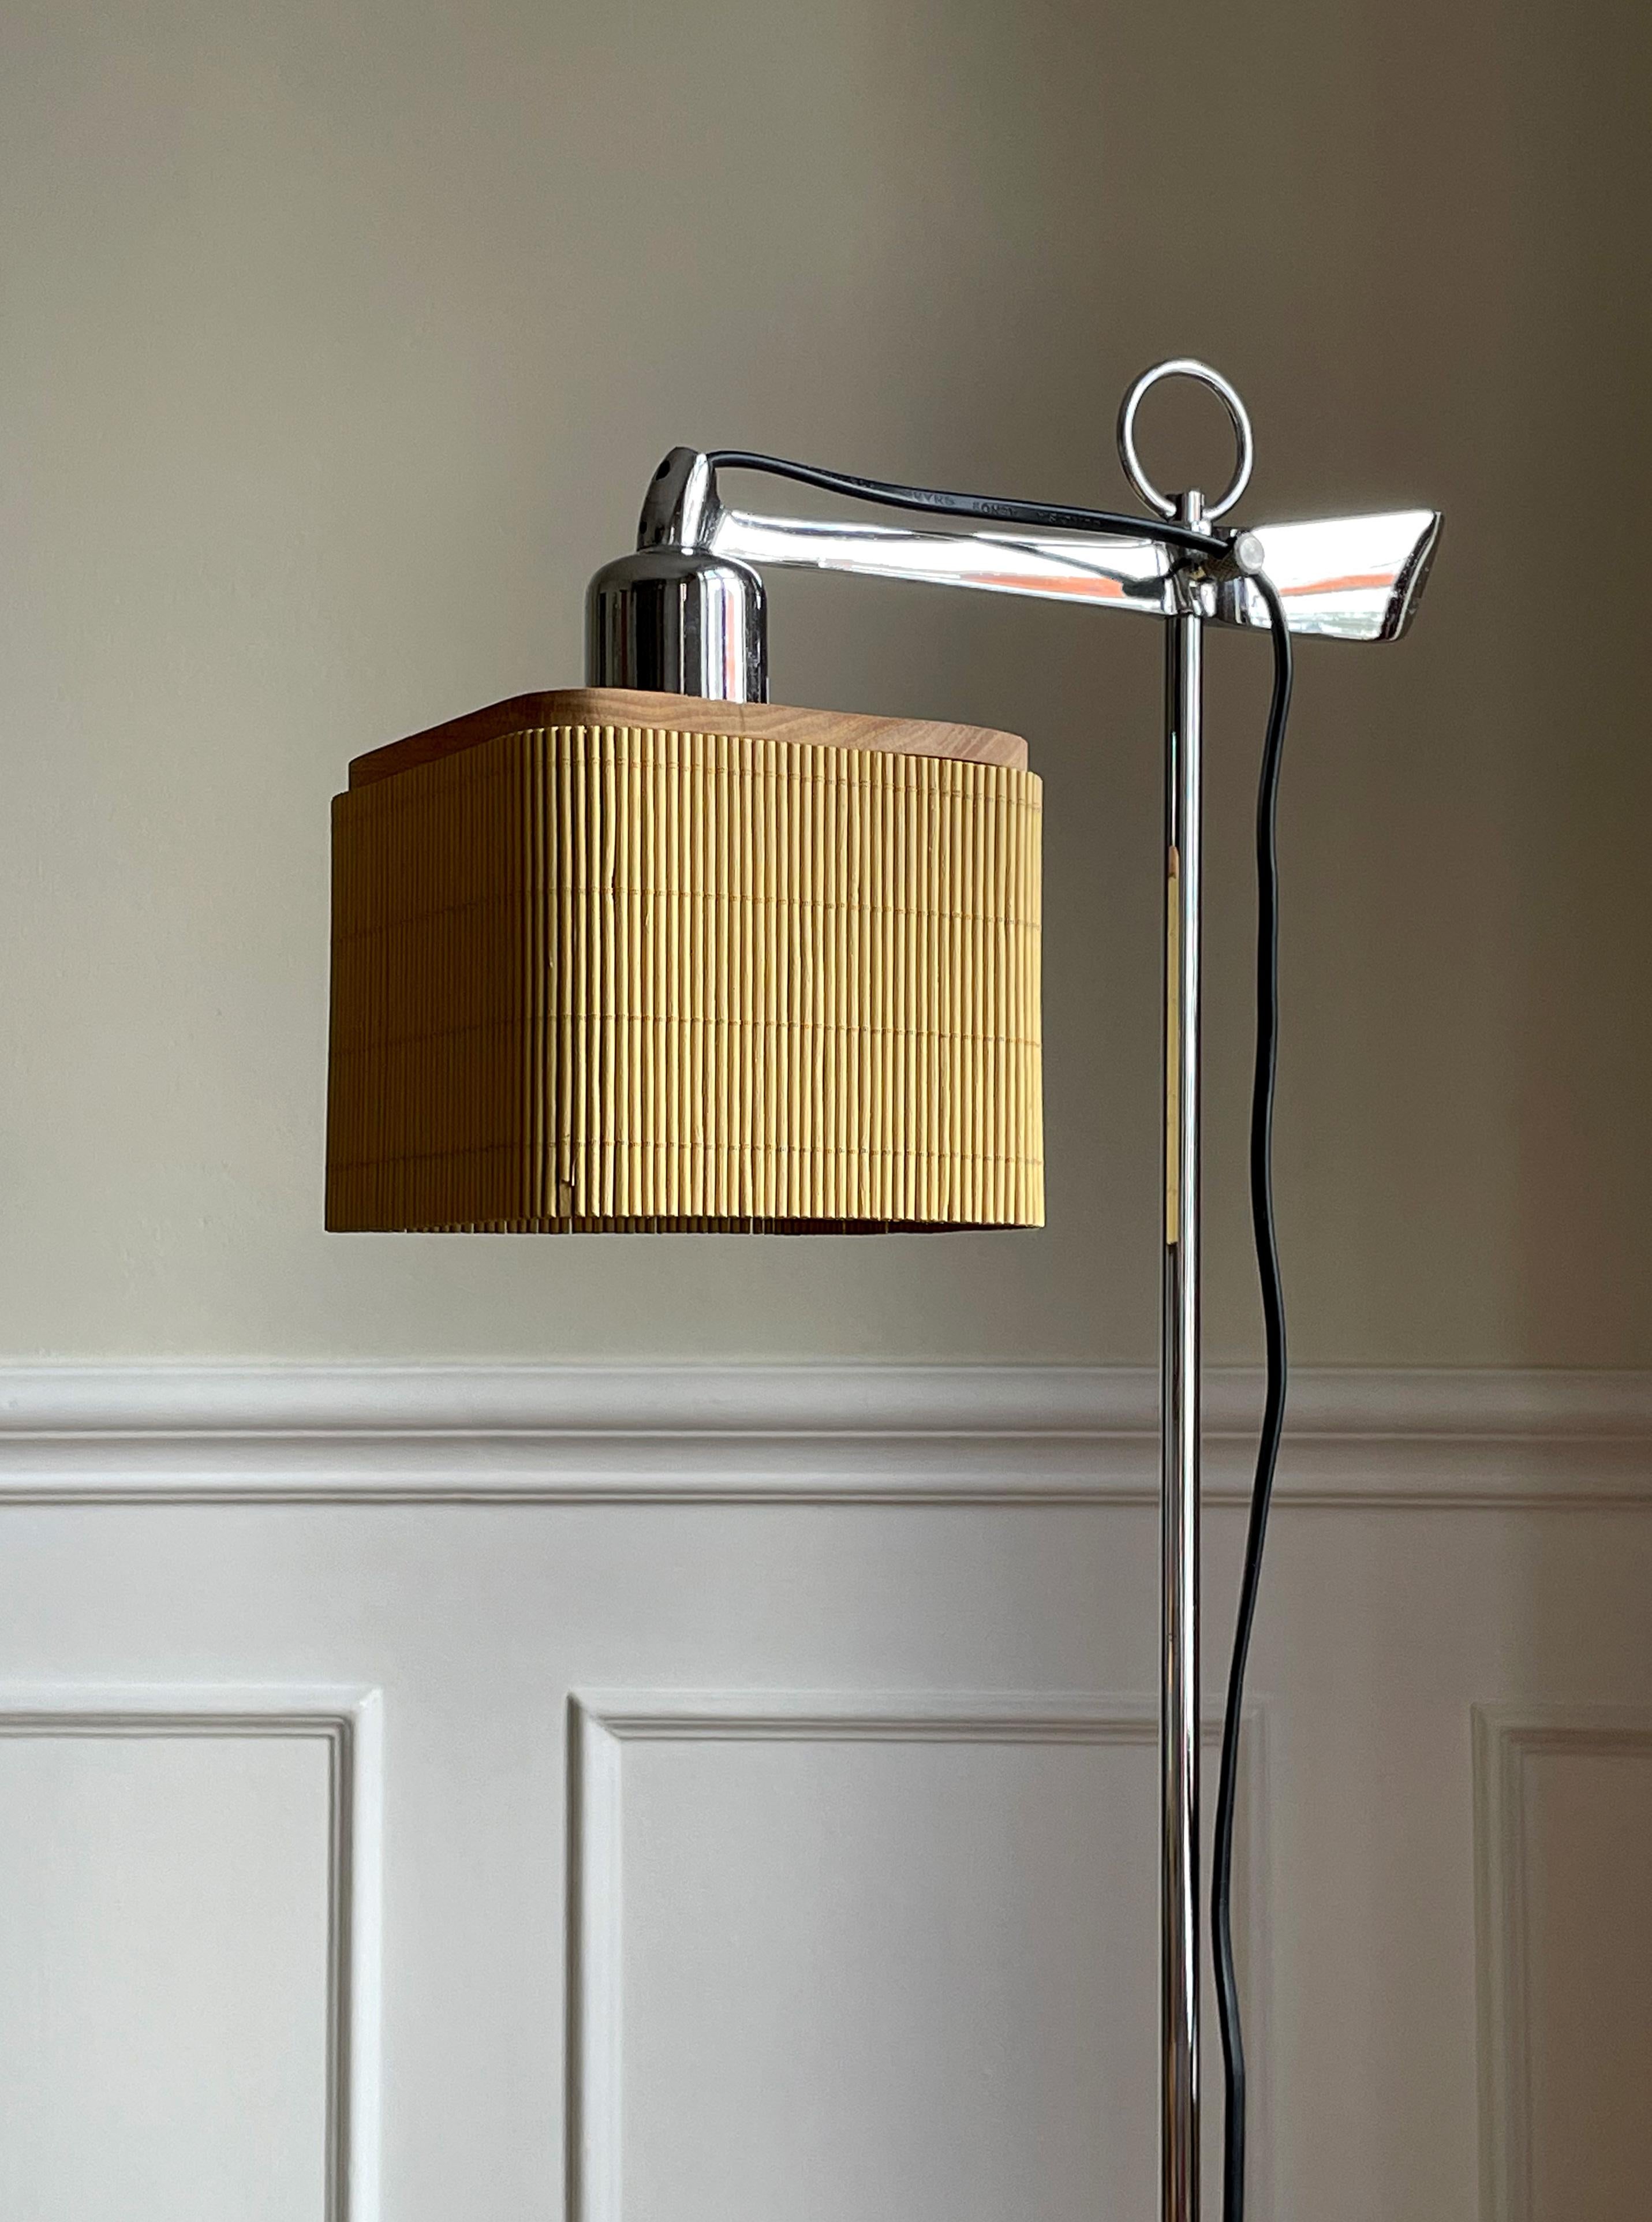 Adjustable Spanish Modernist Floor Lamp, Chrome, Wood, Rattan, 2010s For Sale 5